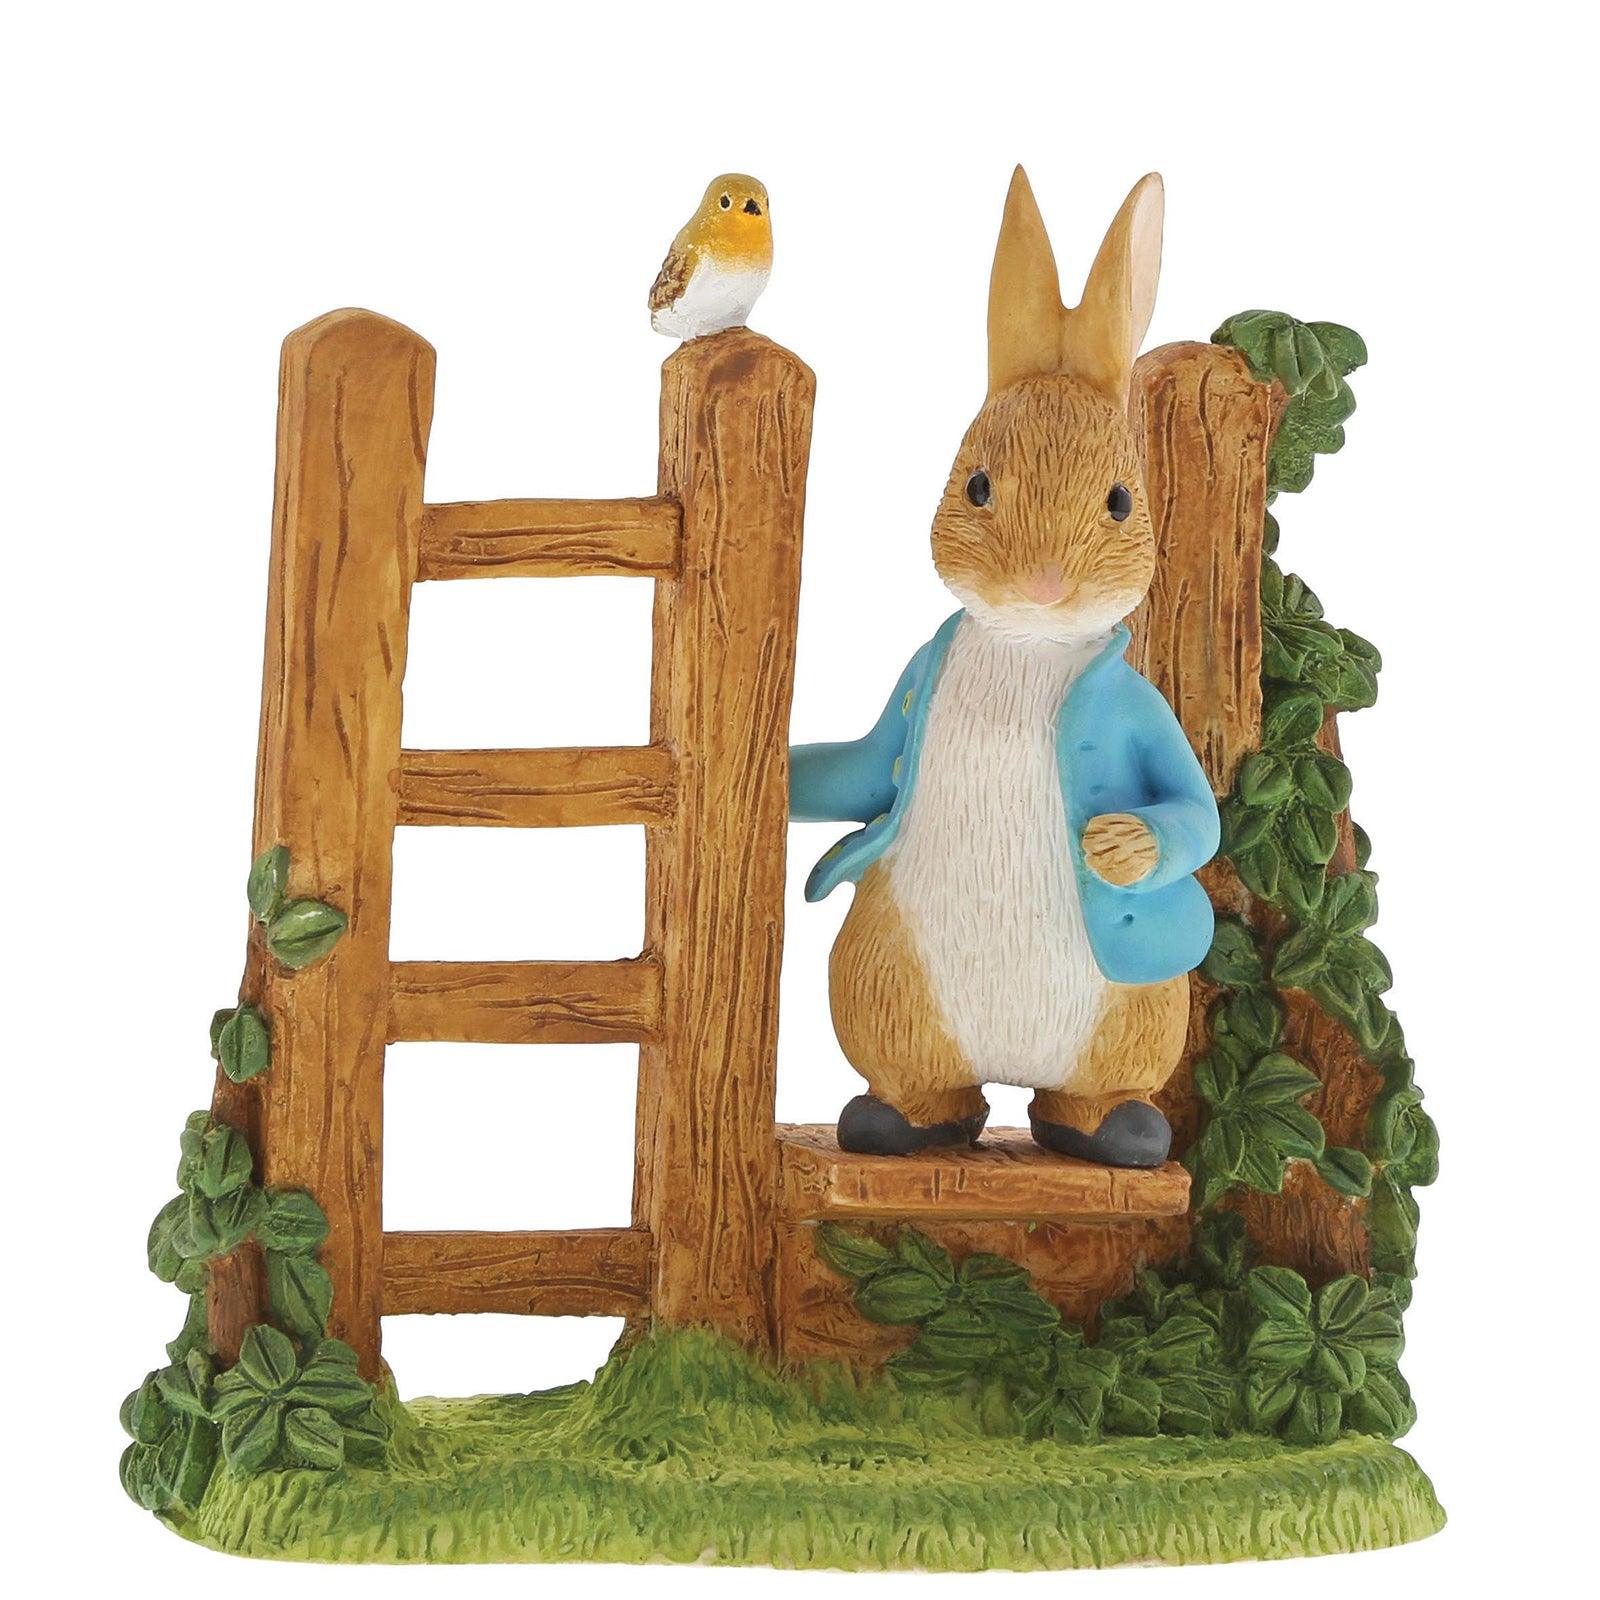 Peter Rabbit on Wooden Stile Figurine (Beatrix Potter) - Gallery Gifts Online 